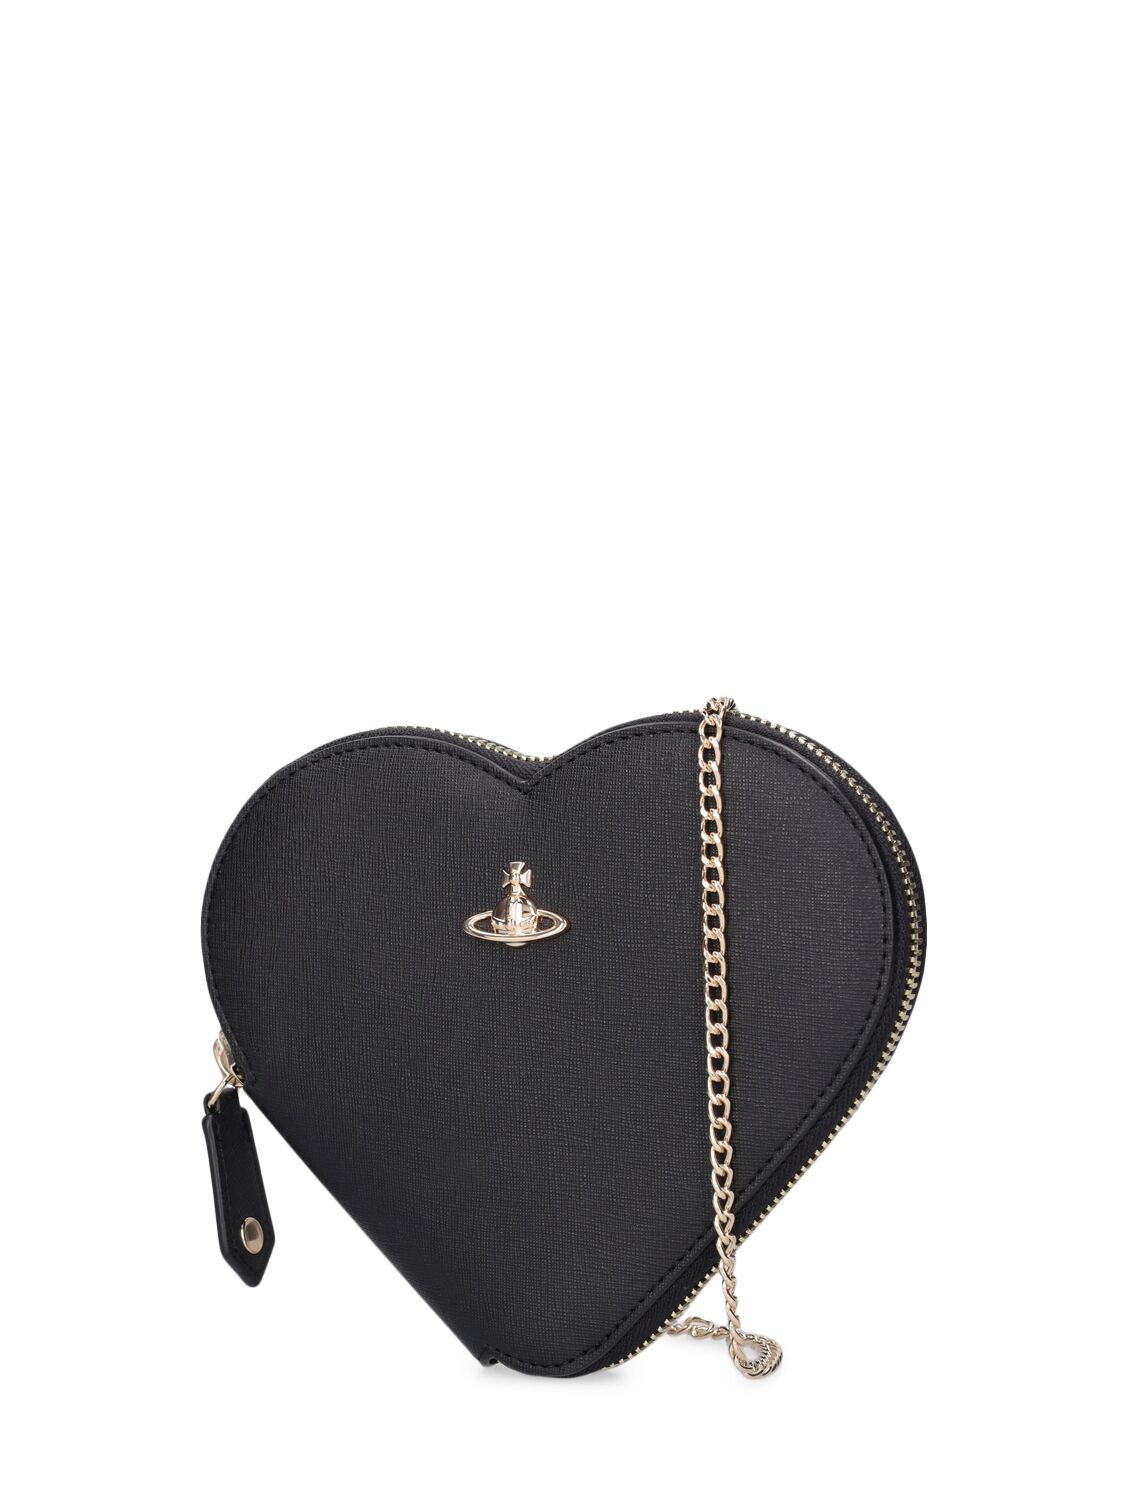 Shop Vivienne Westwood Heart Faux Leather Bag In Black